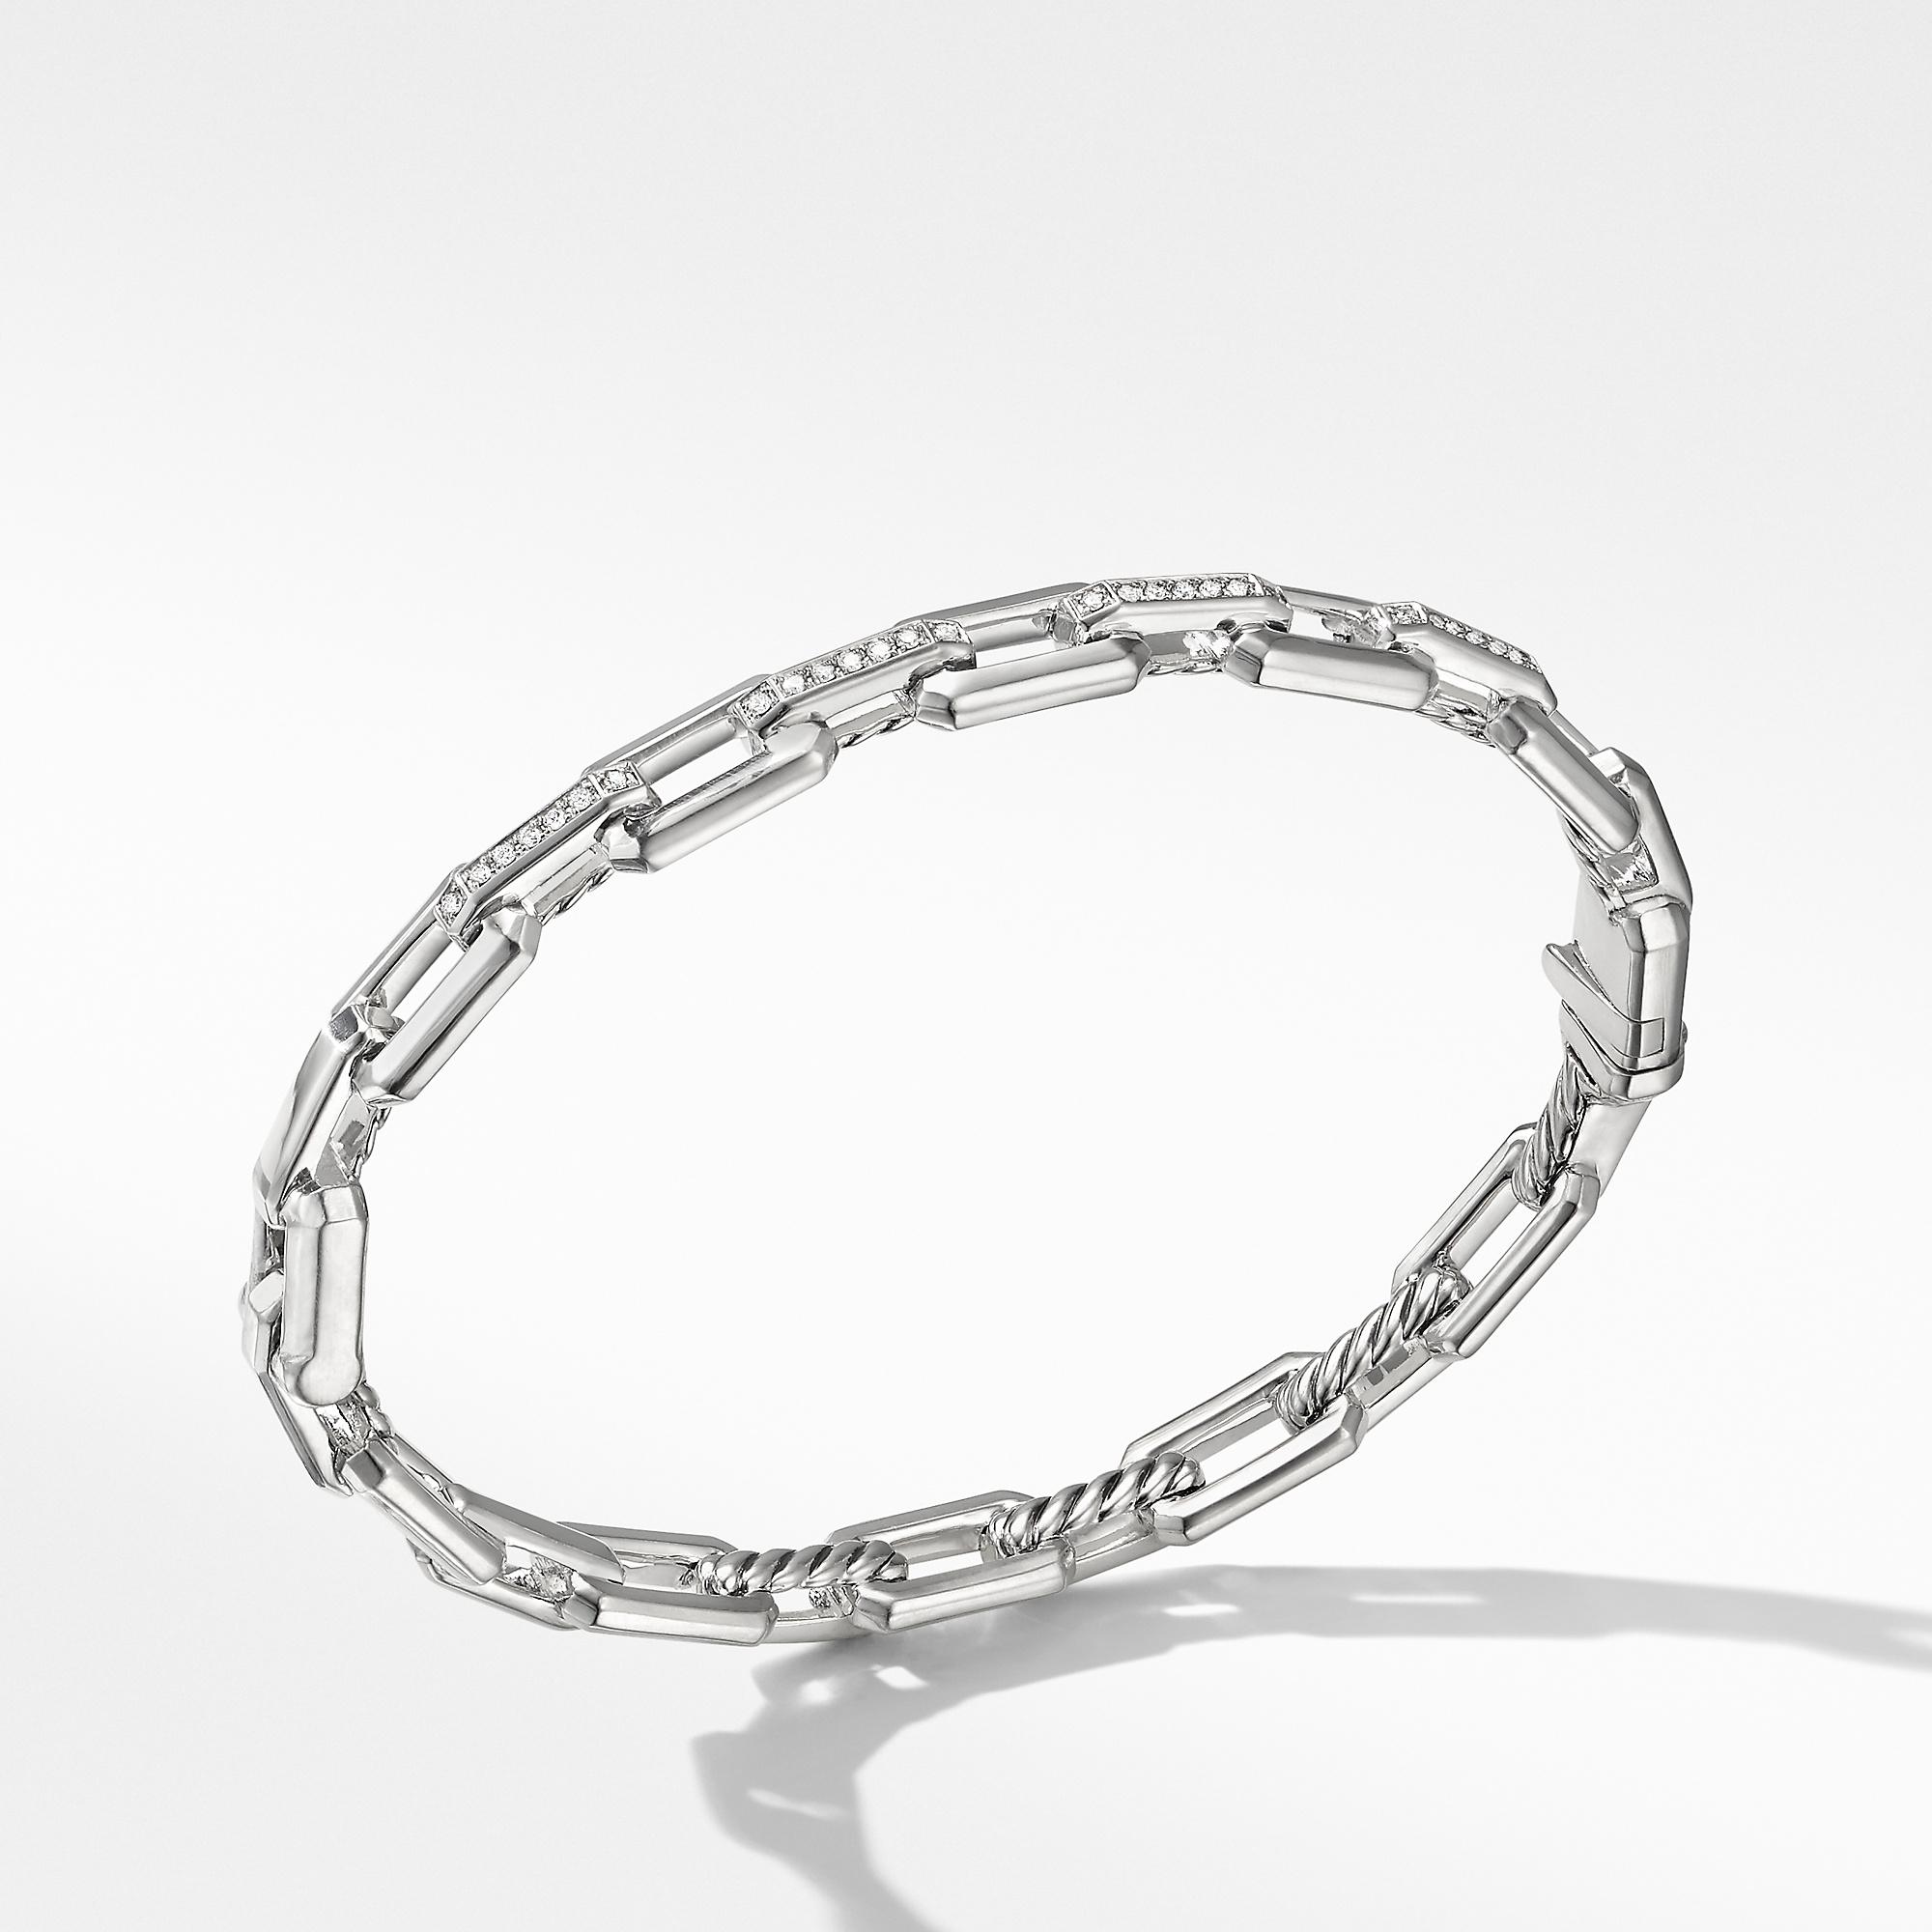 David Yurman Stax Link Bracelet in Sterling Silver with Diamonds, size large